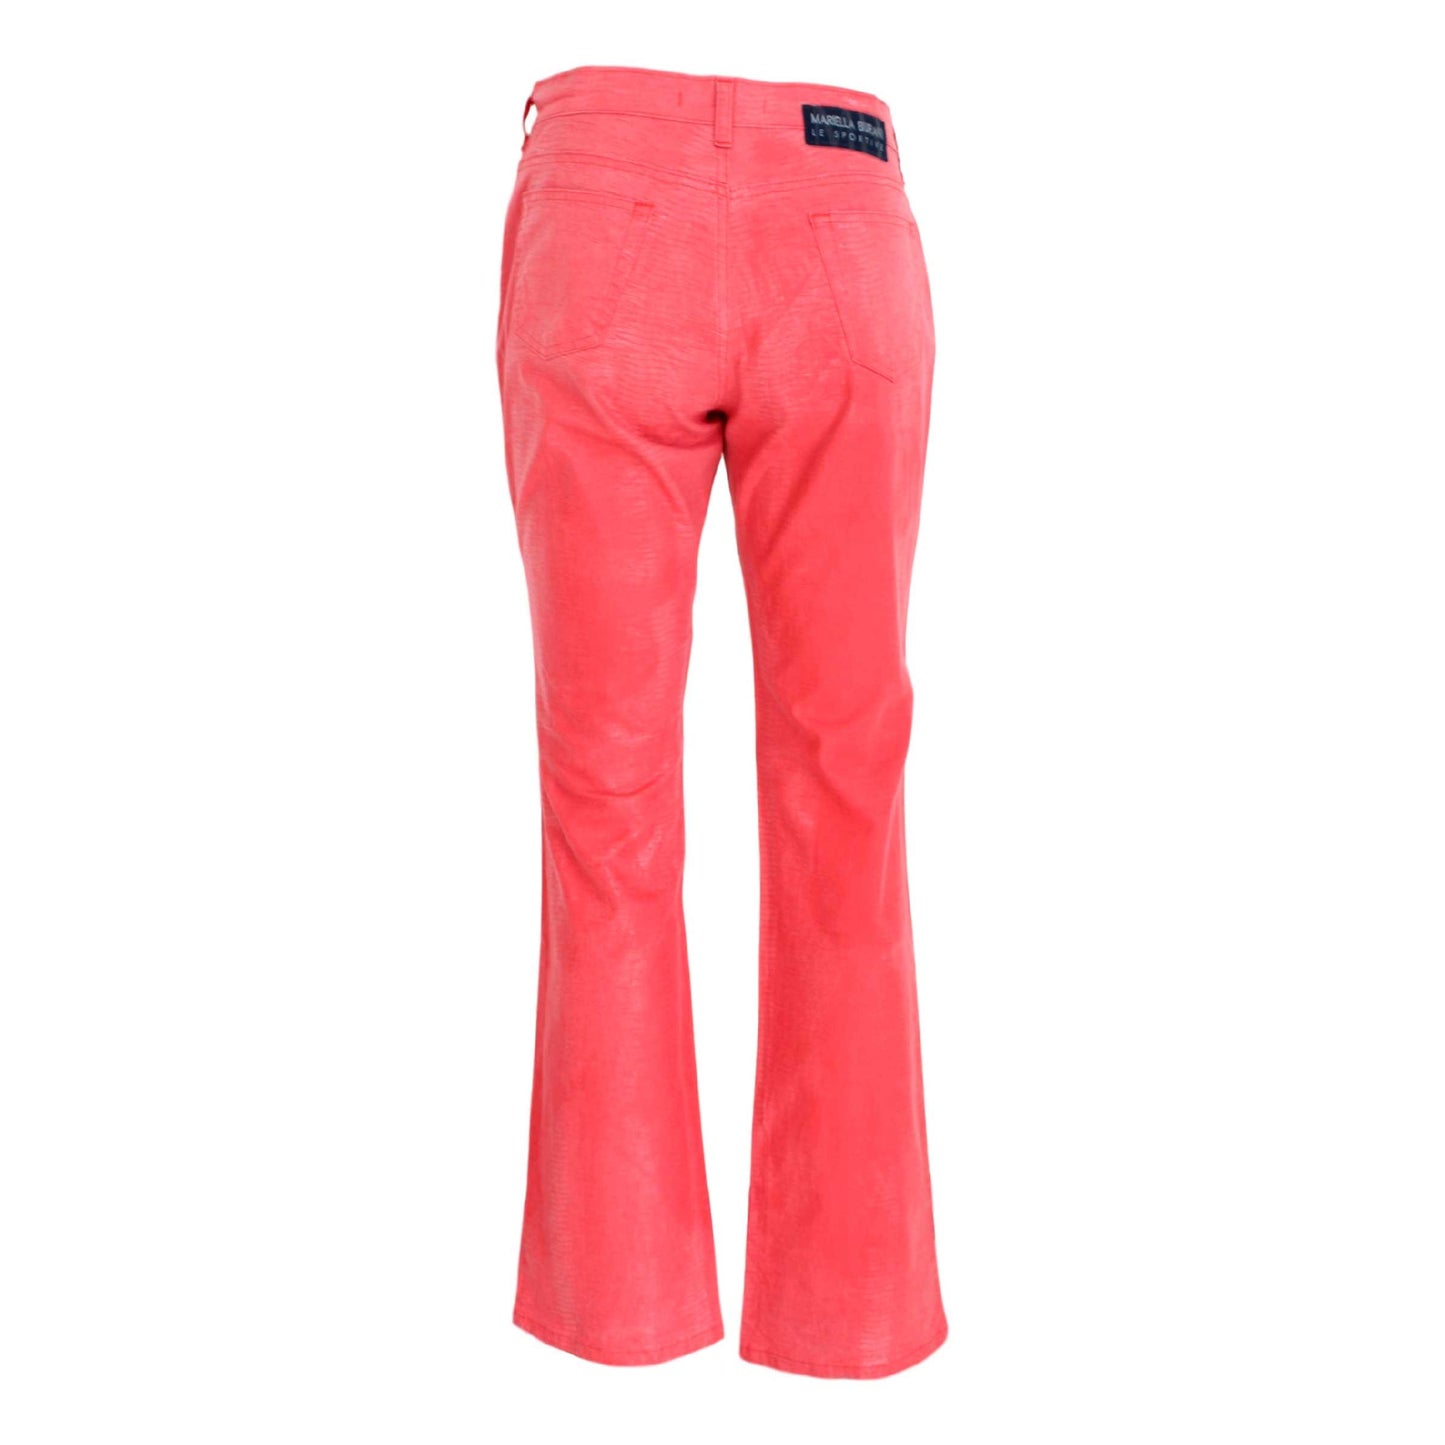 Mariella Burani Vintage Cotton Pink Pants